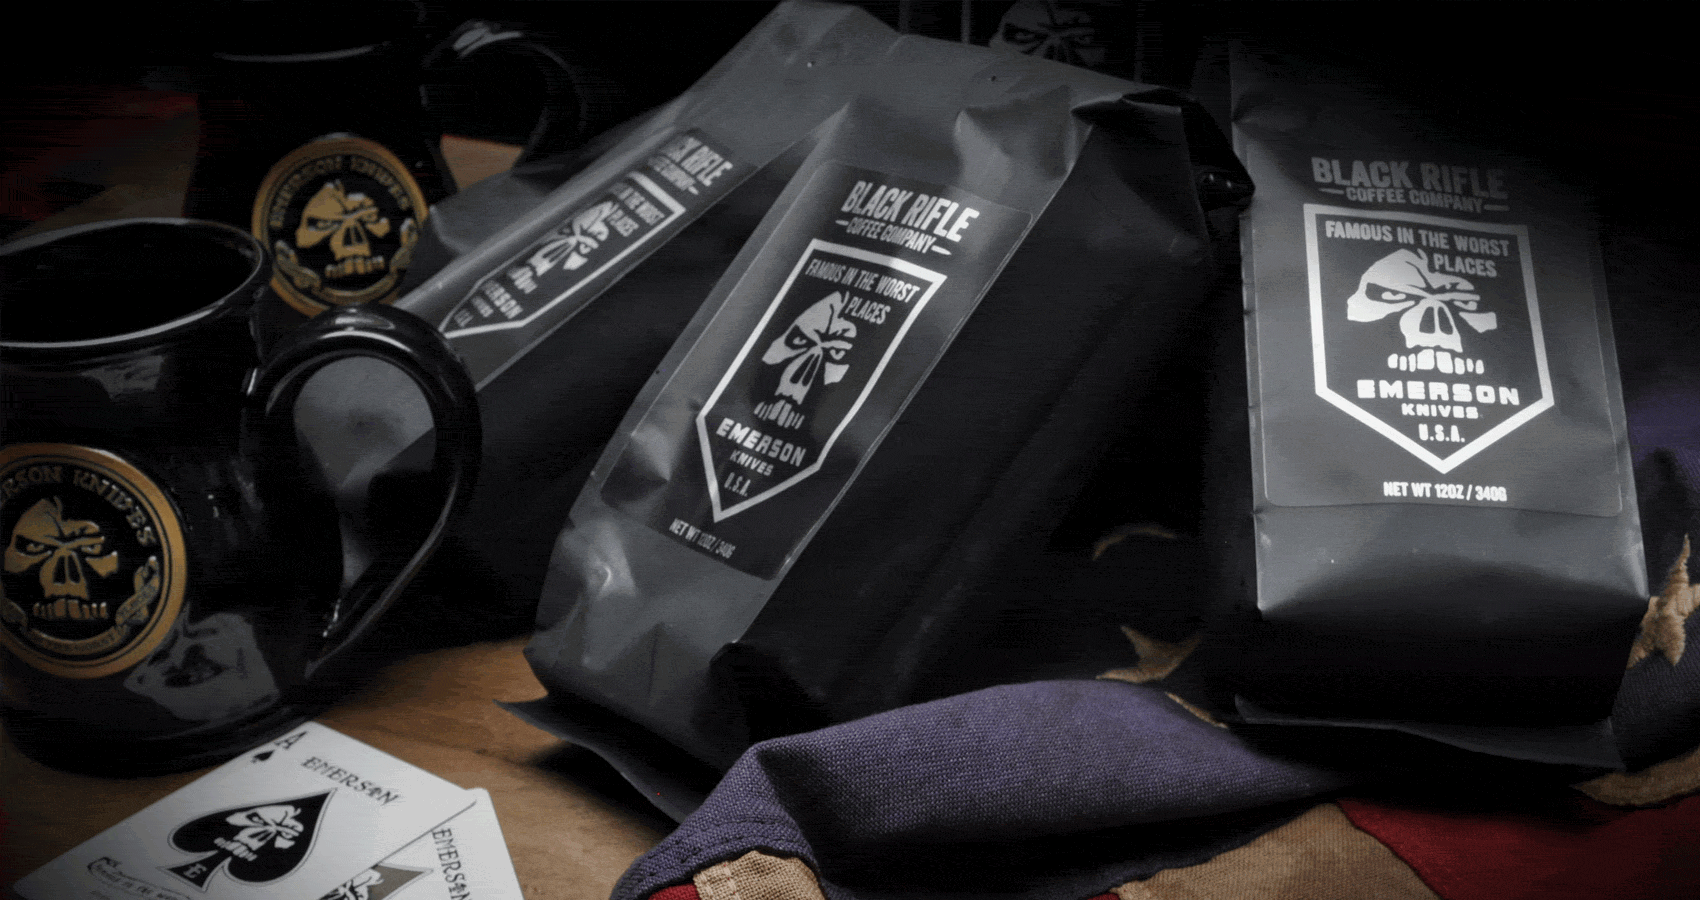 Black Rifle Coffee Company, Emerson Knives